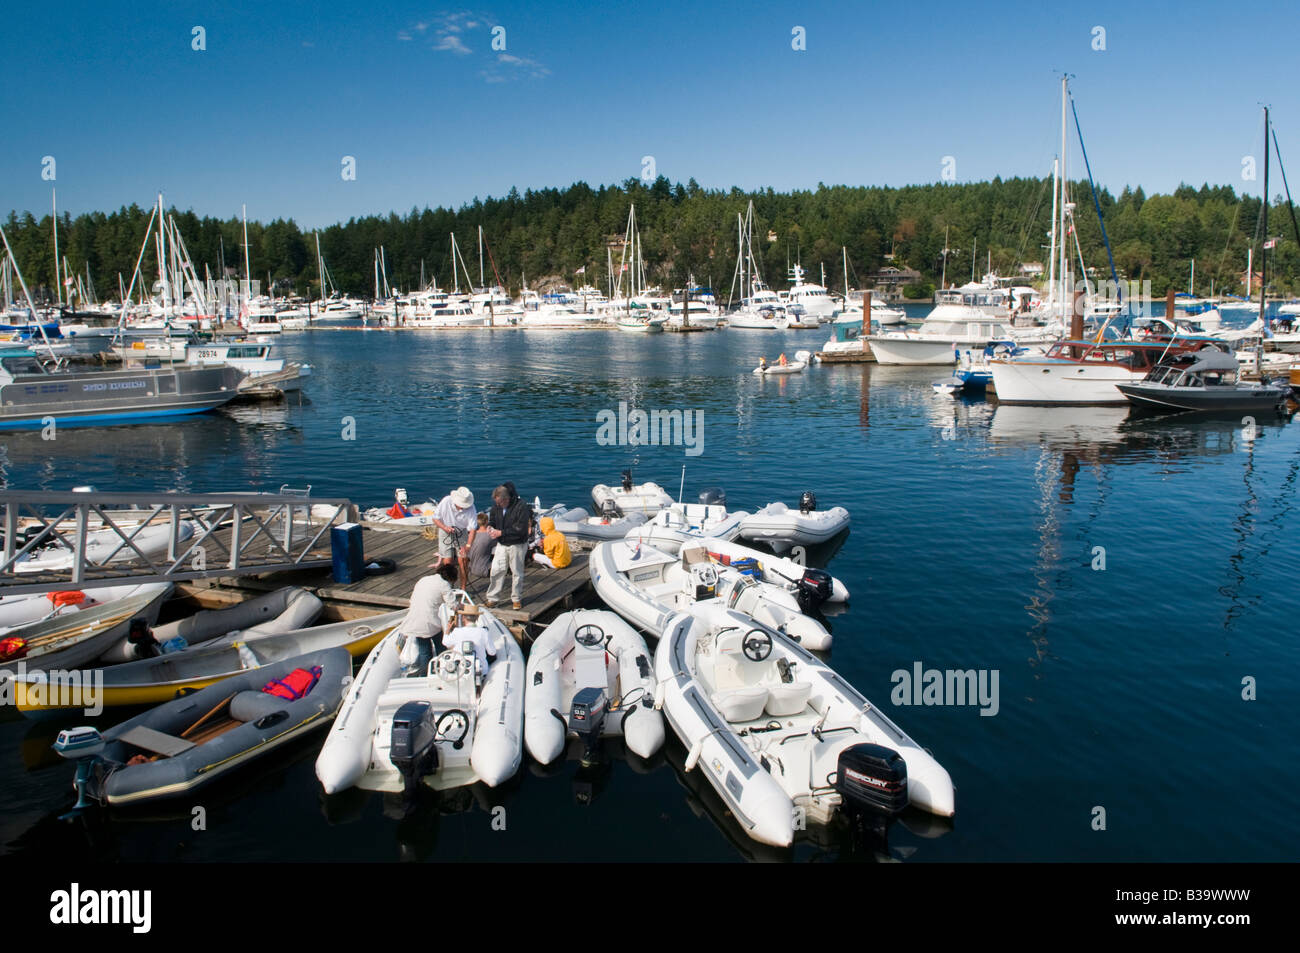 "Ganges Hafen auf Saltspring Island in British Columbia Kanada" Stockfoto